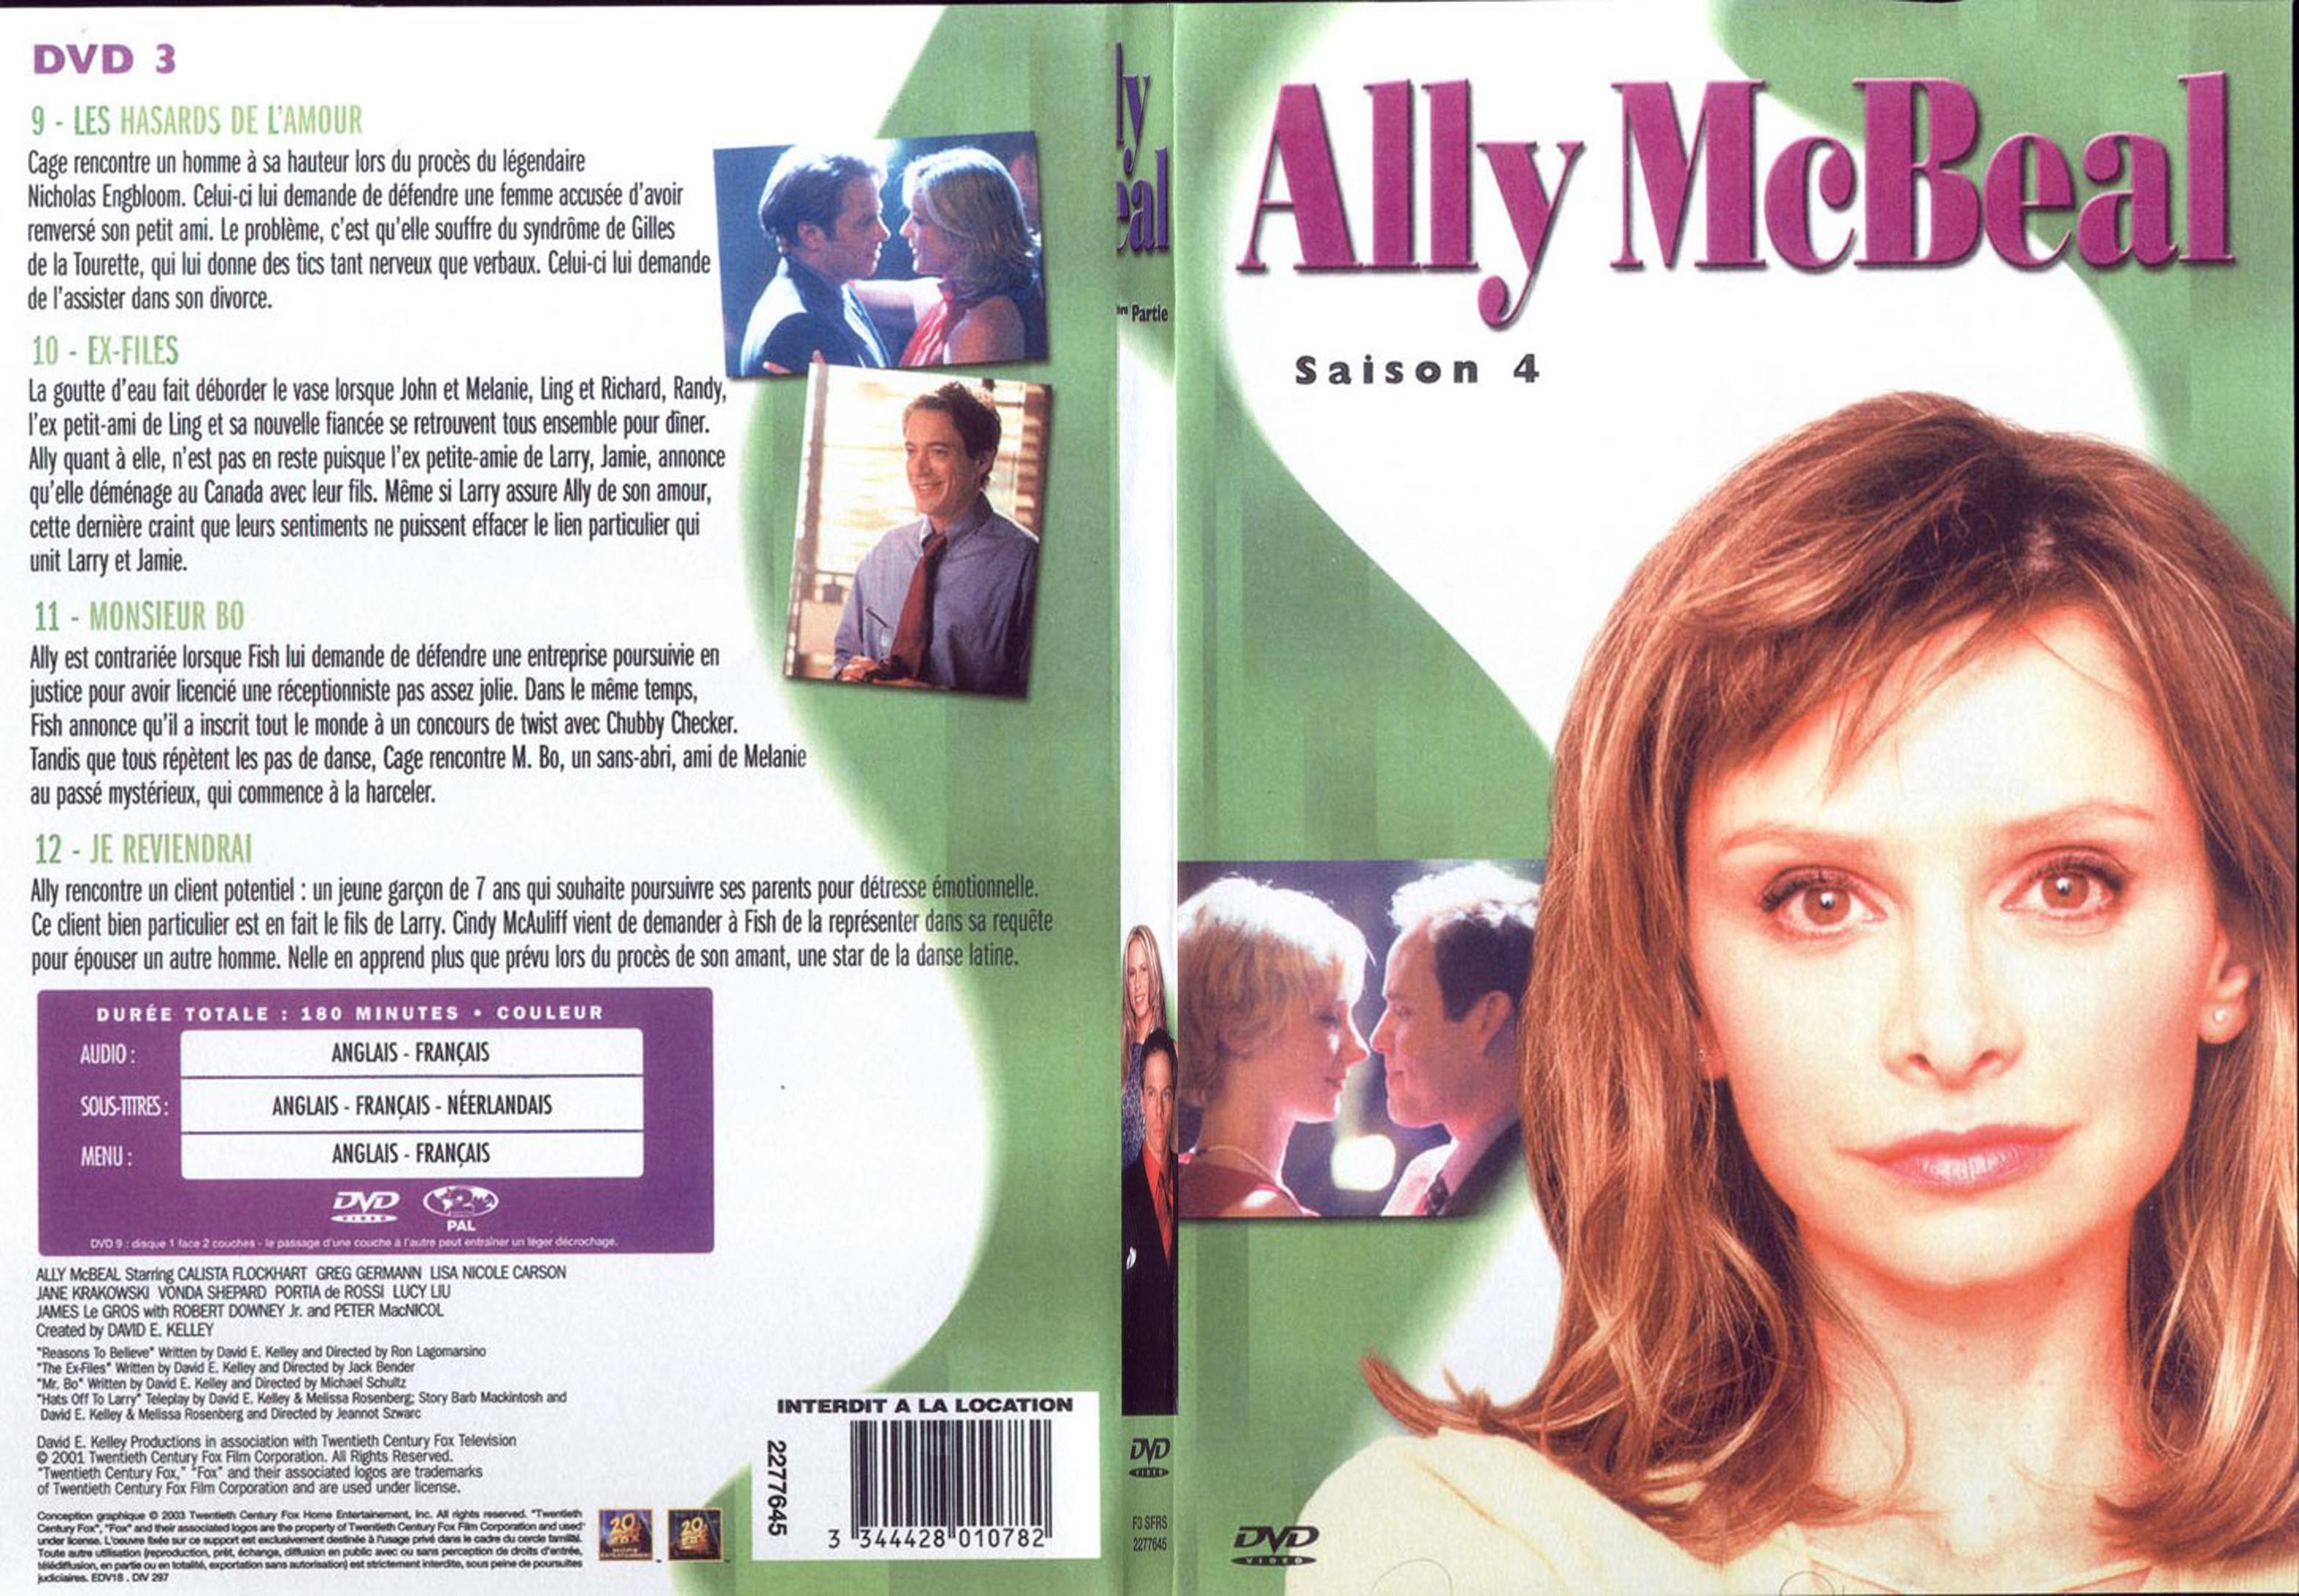 Jaquette DVD Ally McBeal saison 4 dvd 3 - SLIM